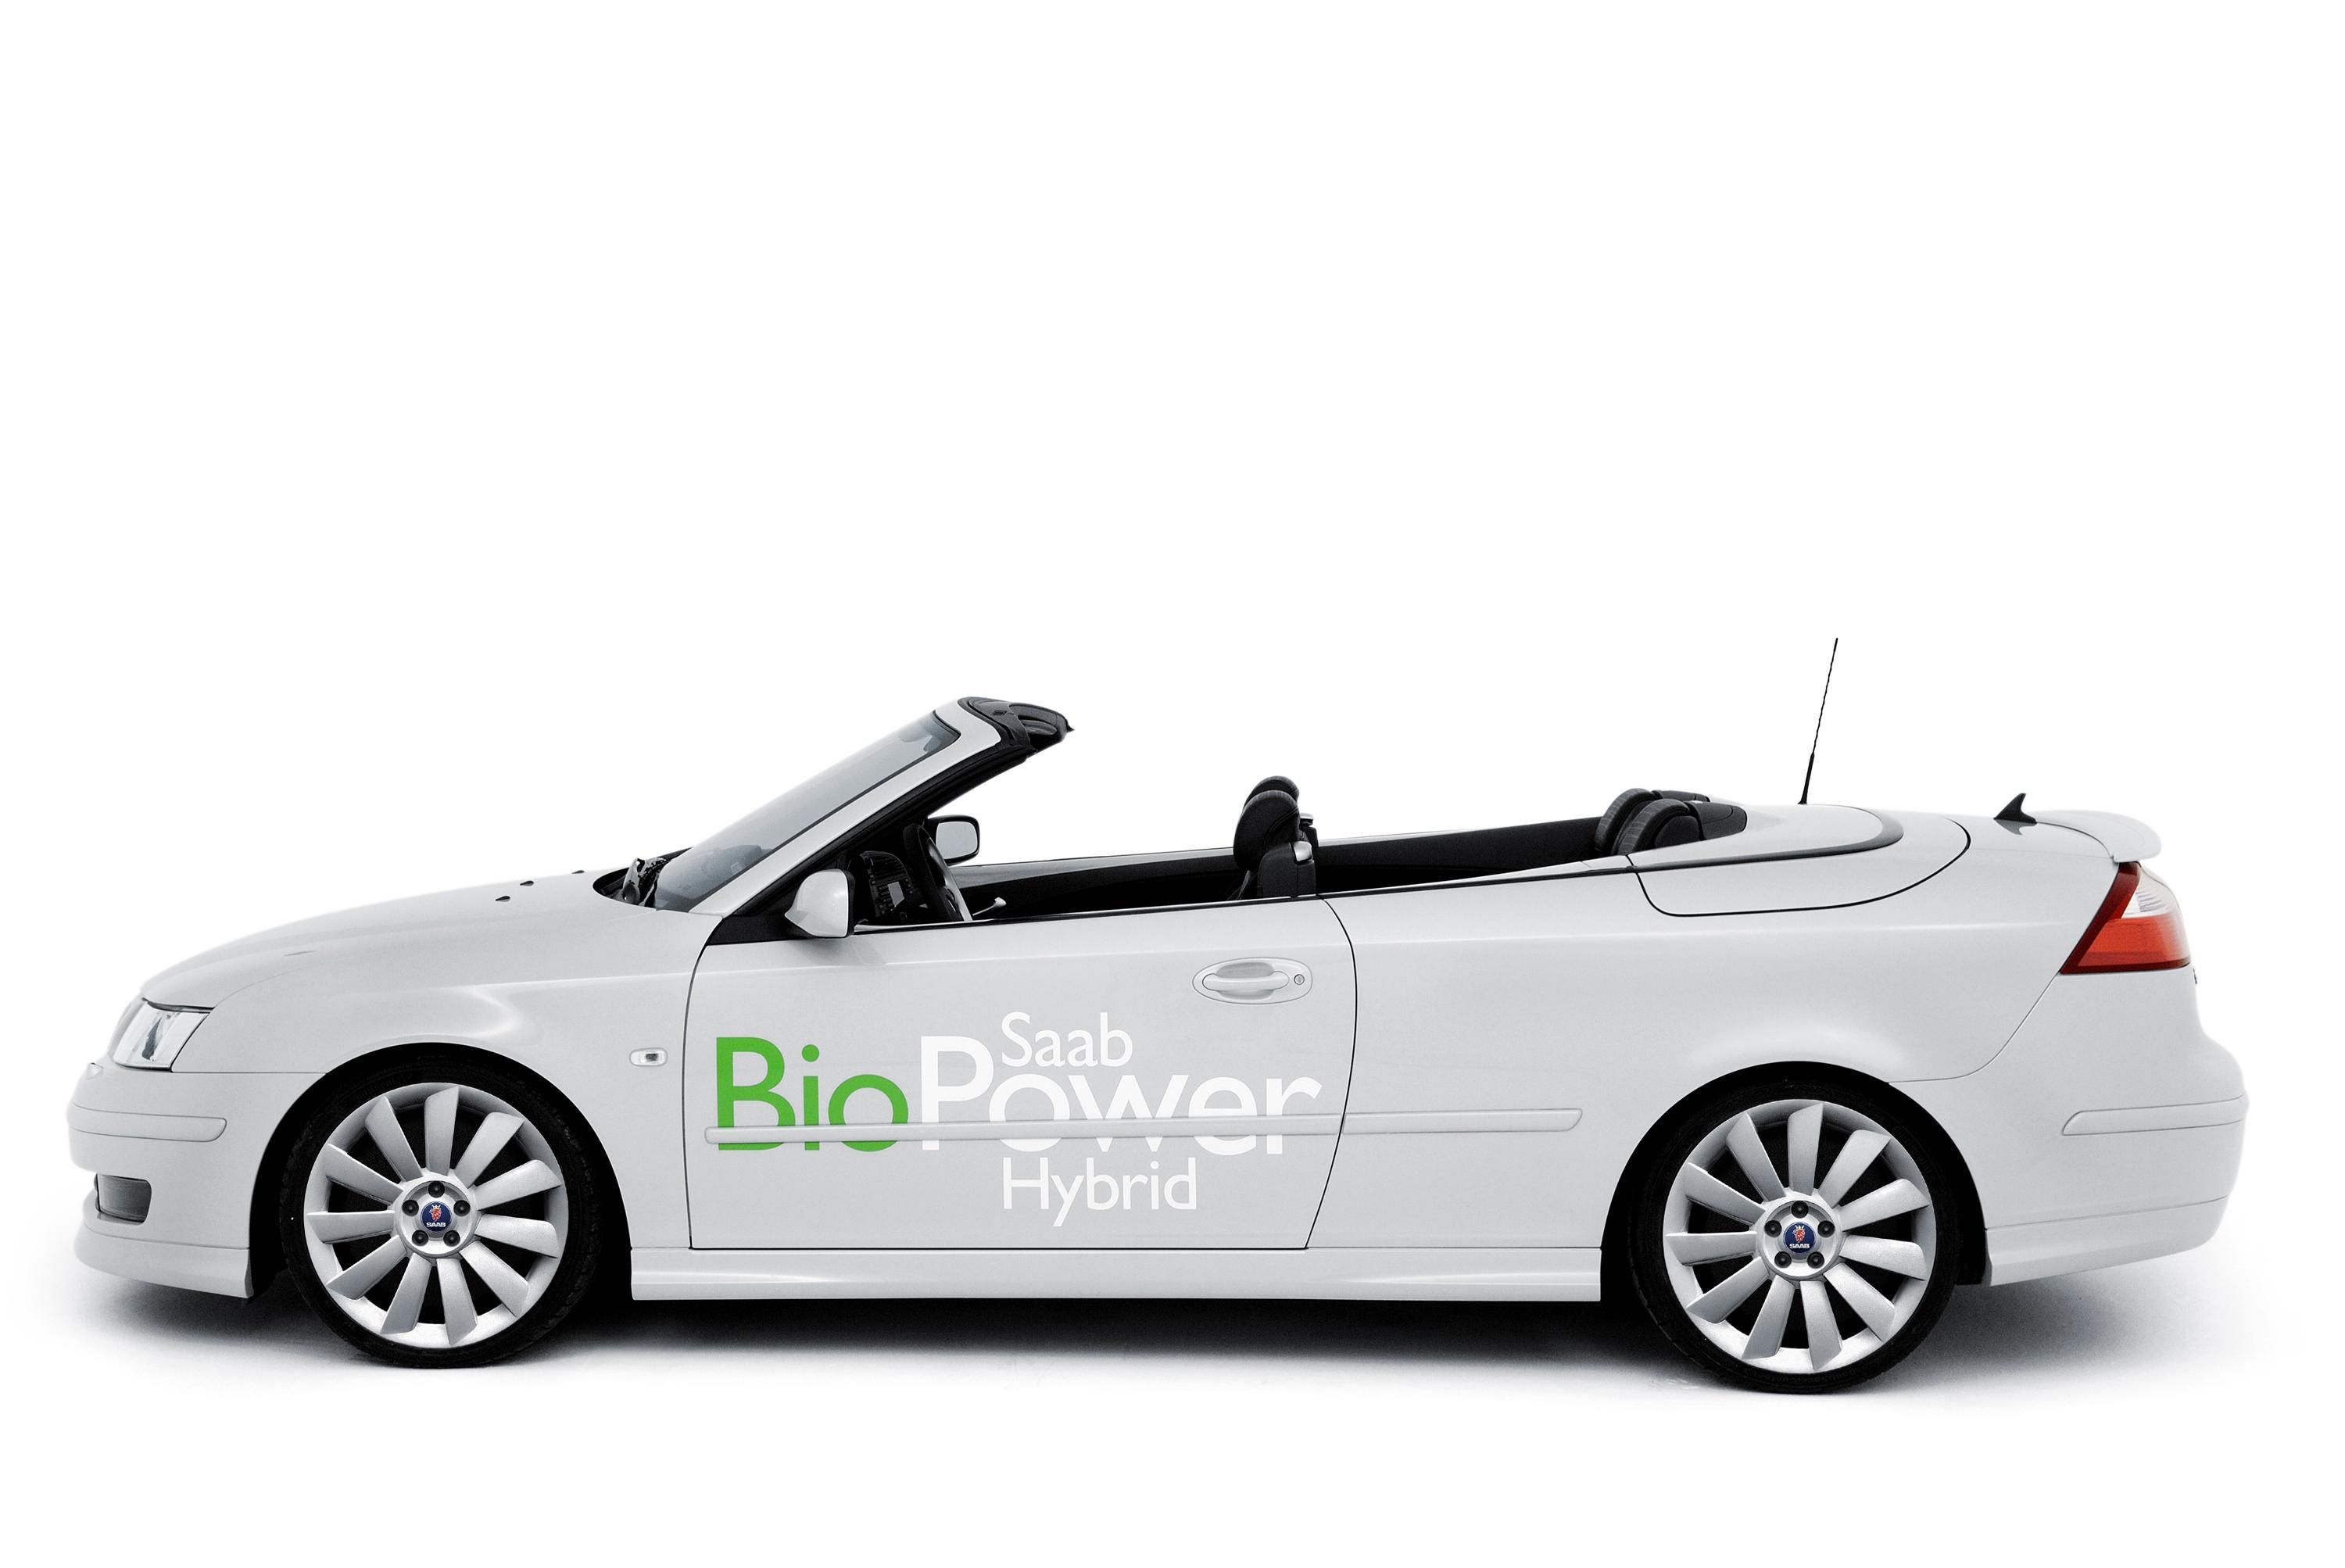 2007 Saab Biopower Hybrid Concept 